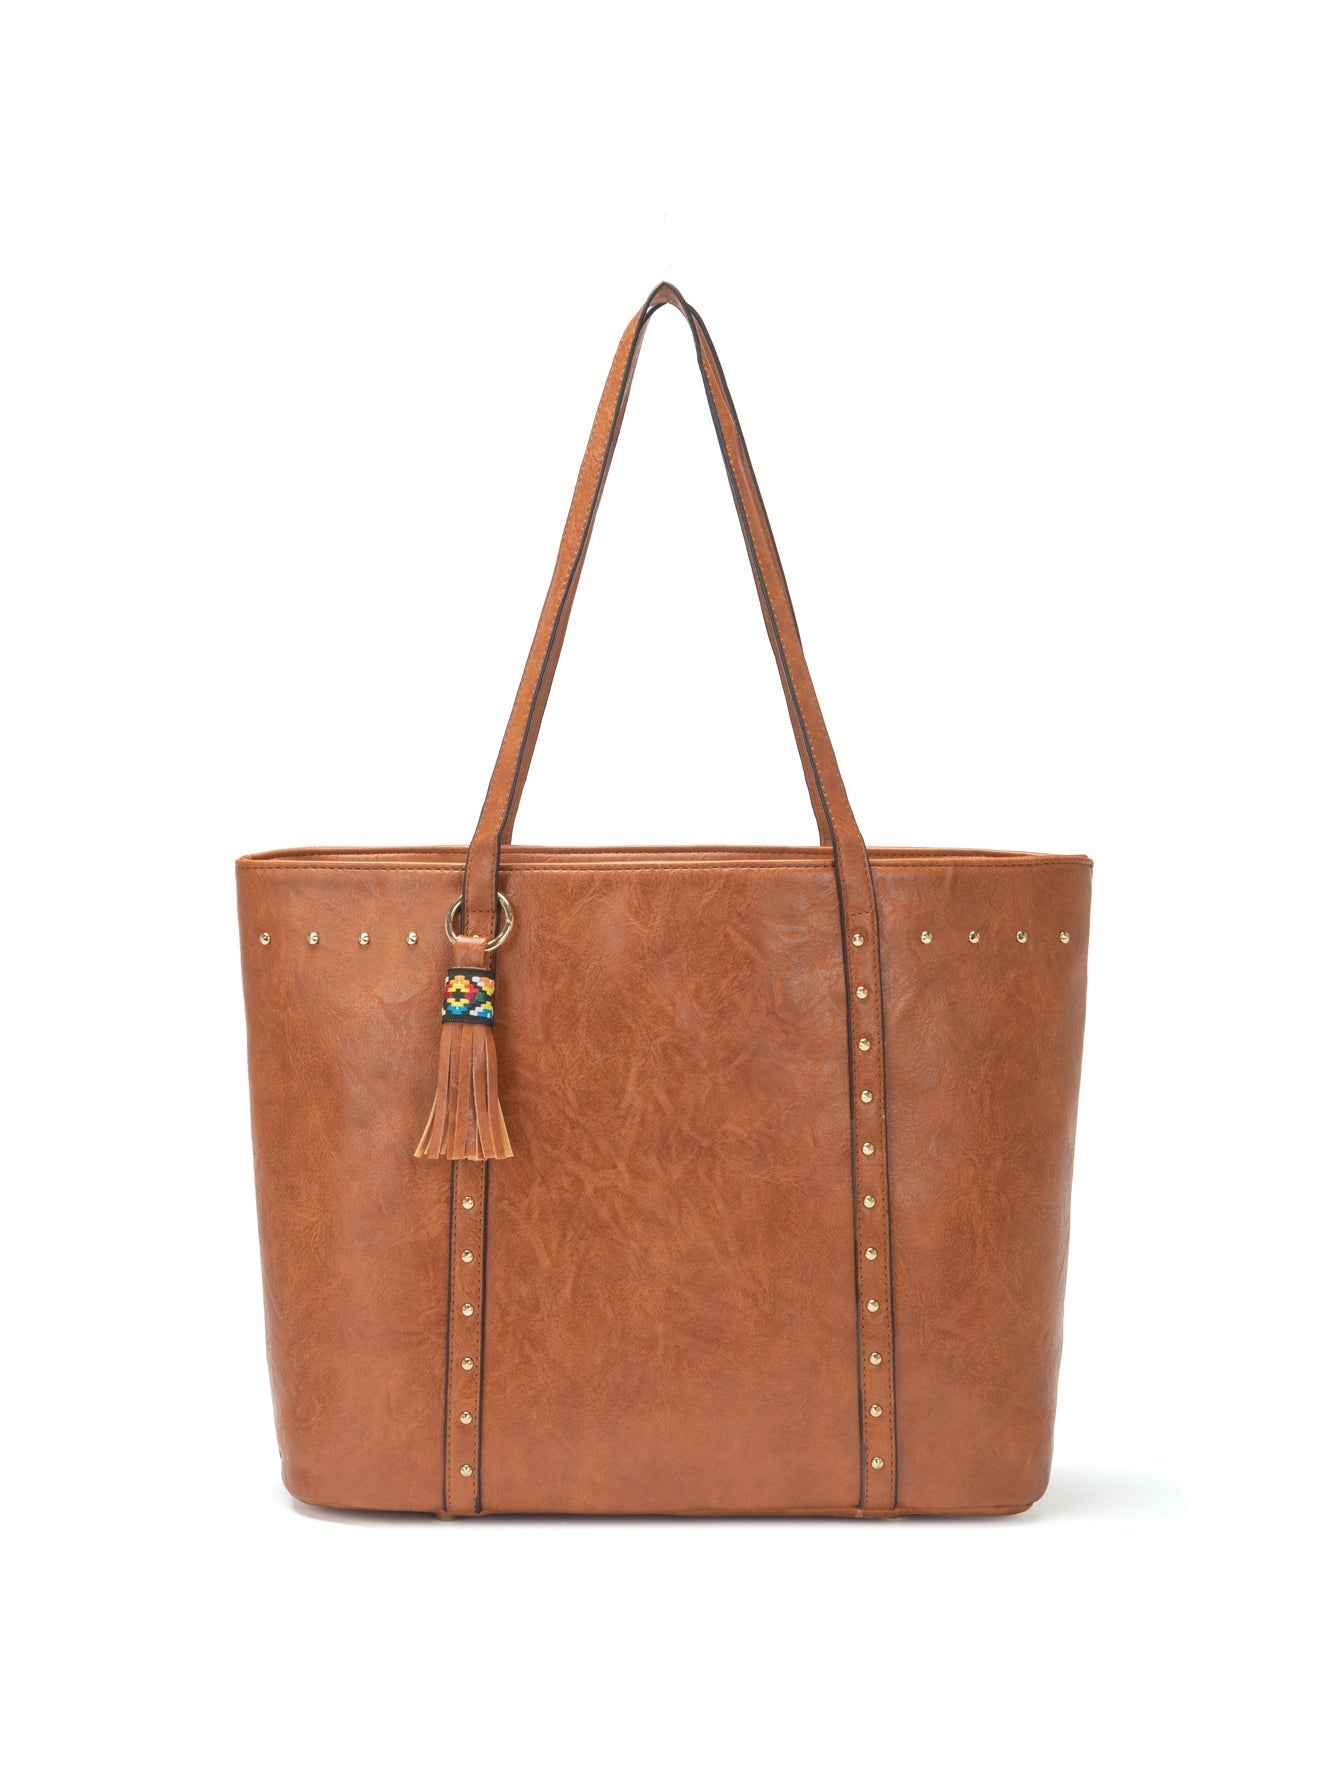 Women Retro Tote handbag Satchel Purse Shoulder Bag Rivet Decoration Zippred Top-handle Bags with Tassel Sai Feel